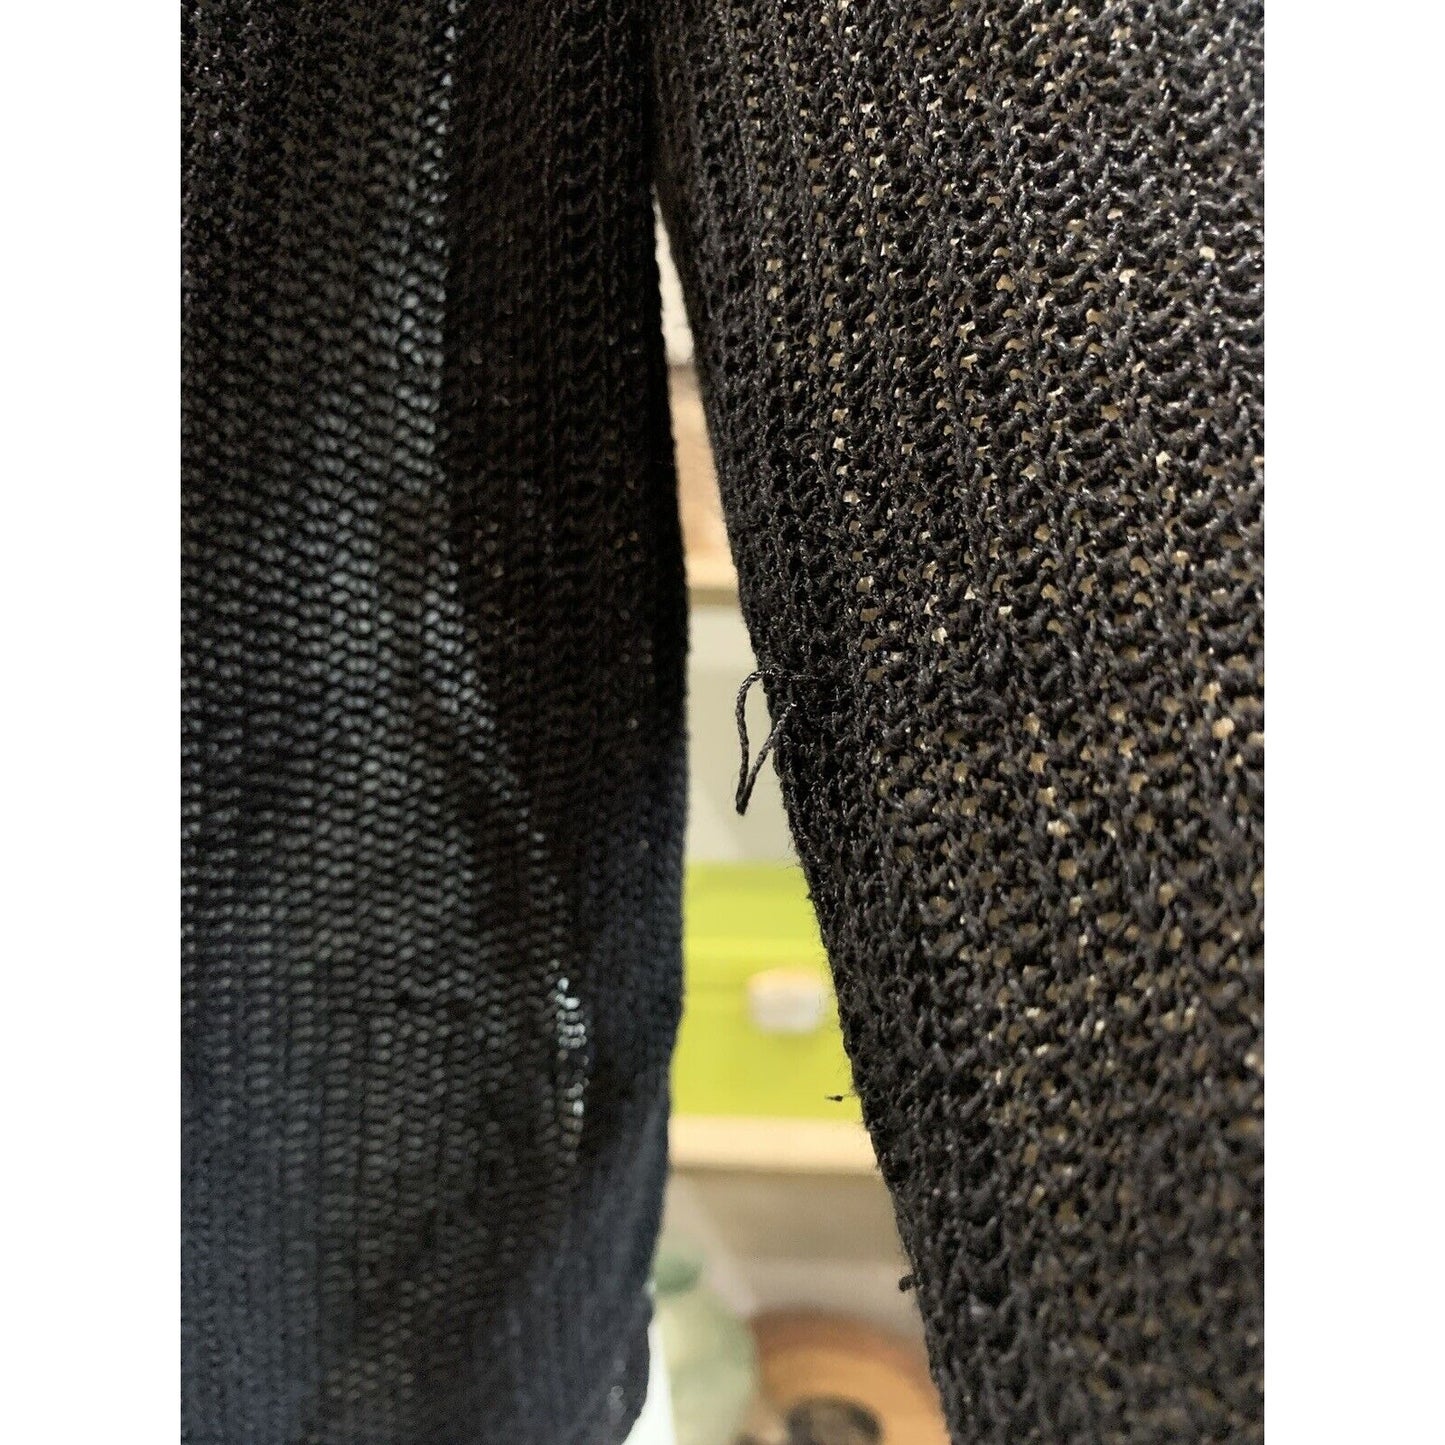 Loose Thread On Women's Black Knit Sweater 